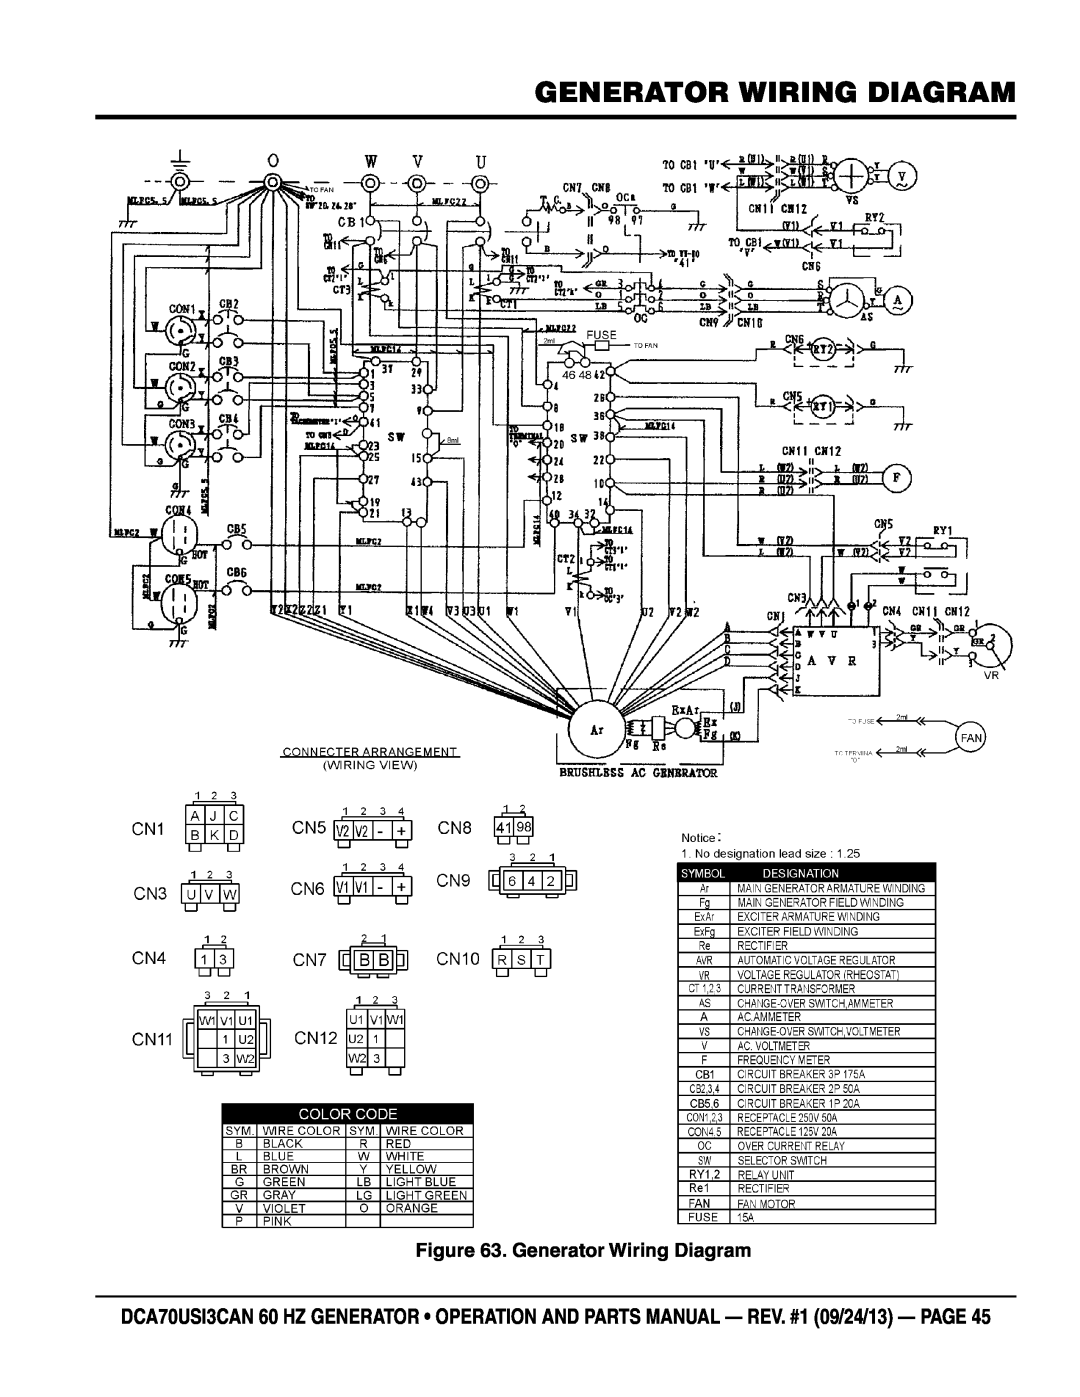 Multiquip DCA70US13CAN manual Generator Wiring Diagram 